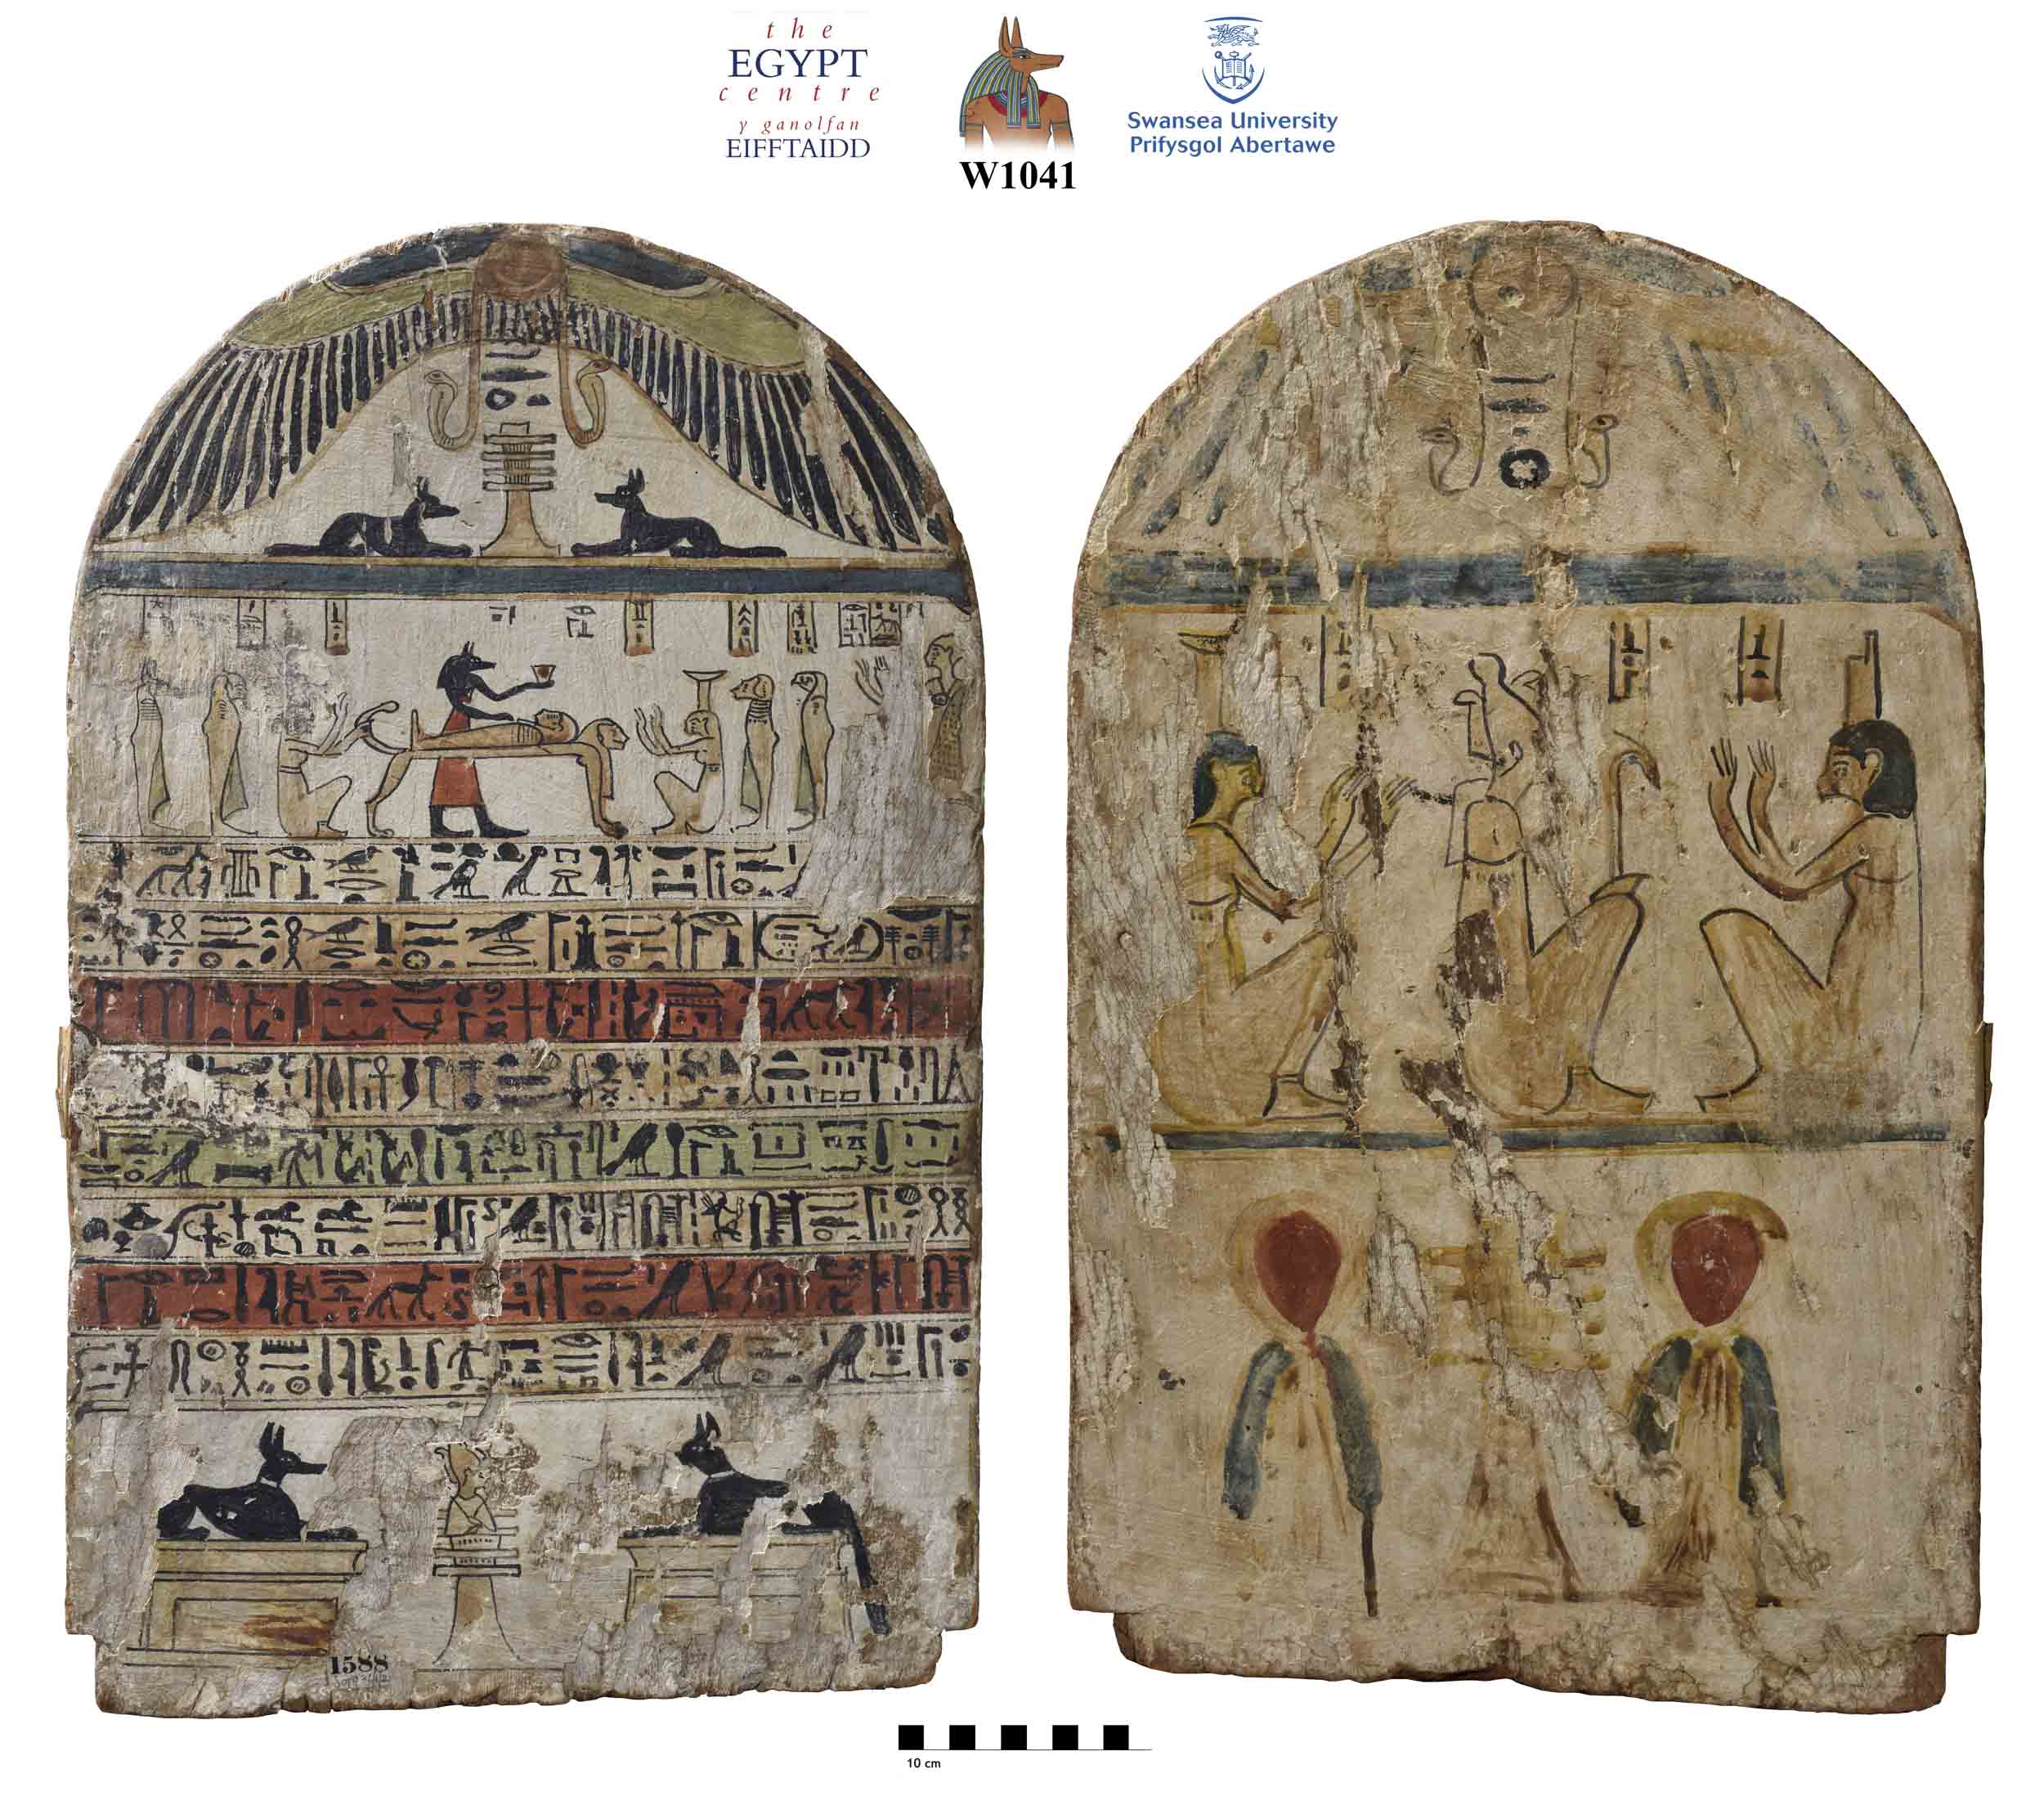 Image for: Wooden stela